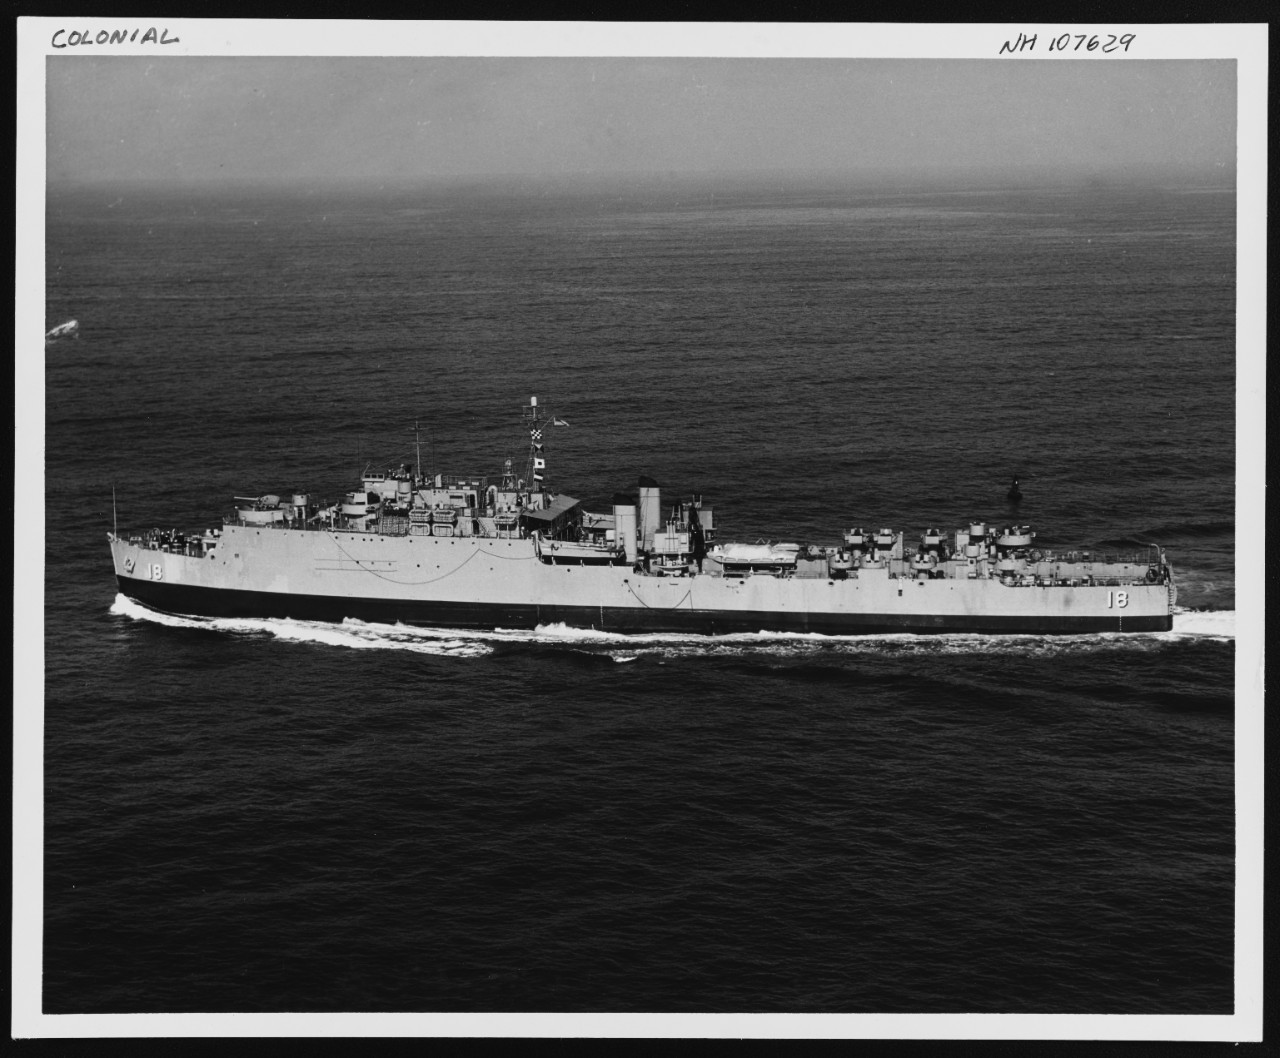 Photo #: NH 107629  USS Colonial